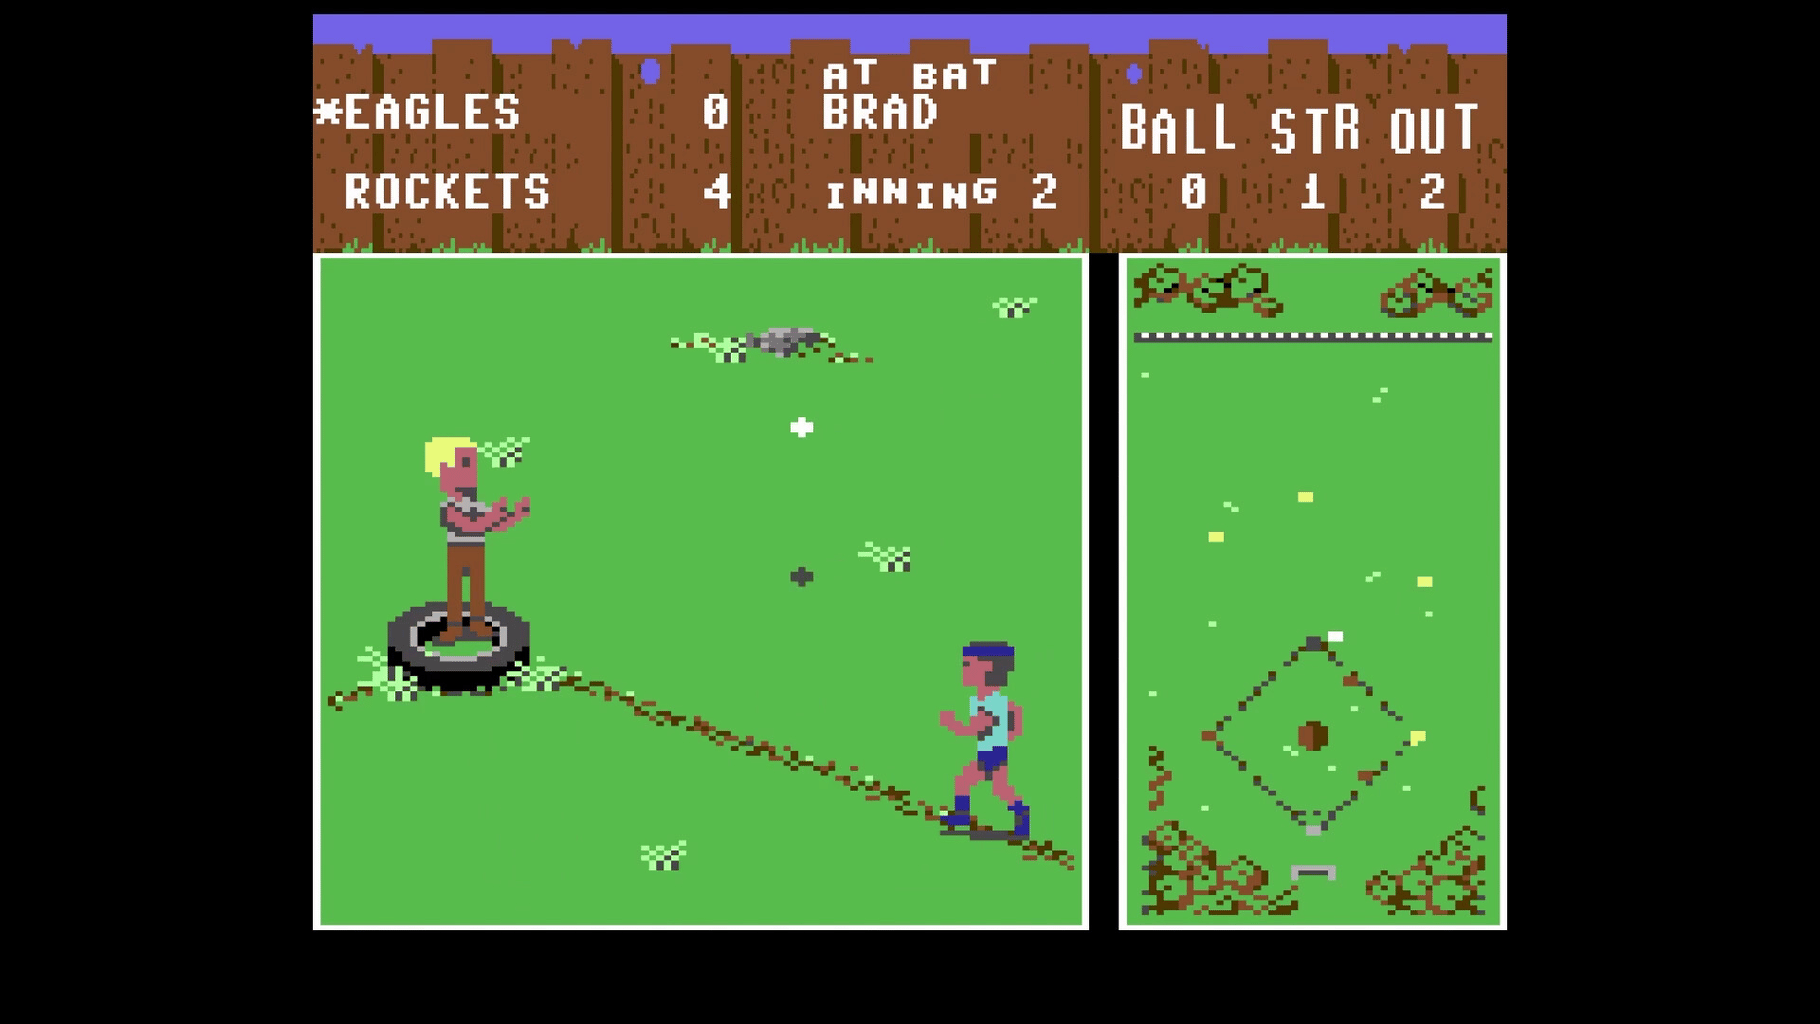 Street Sports Baseball screenshot